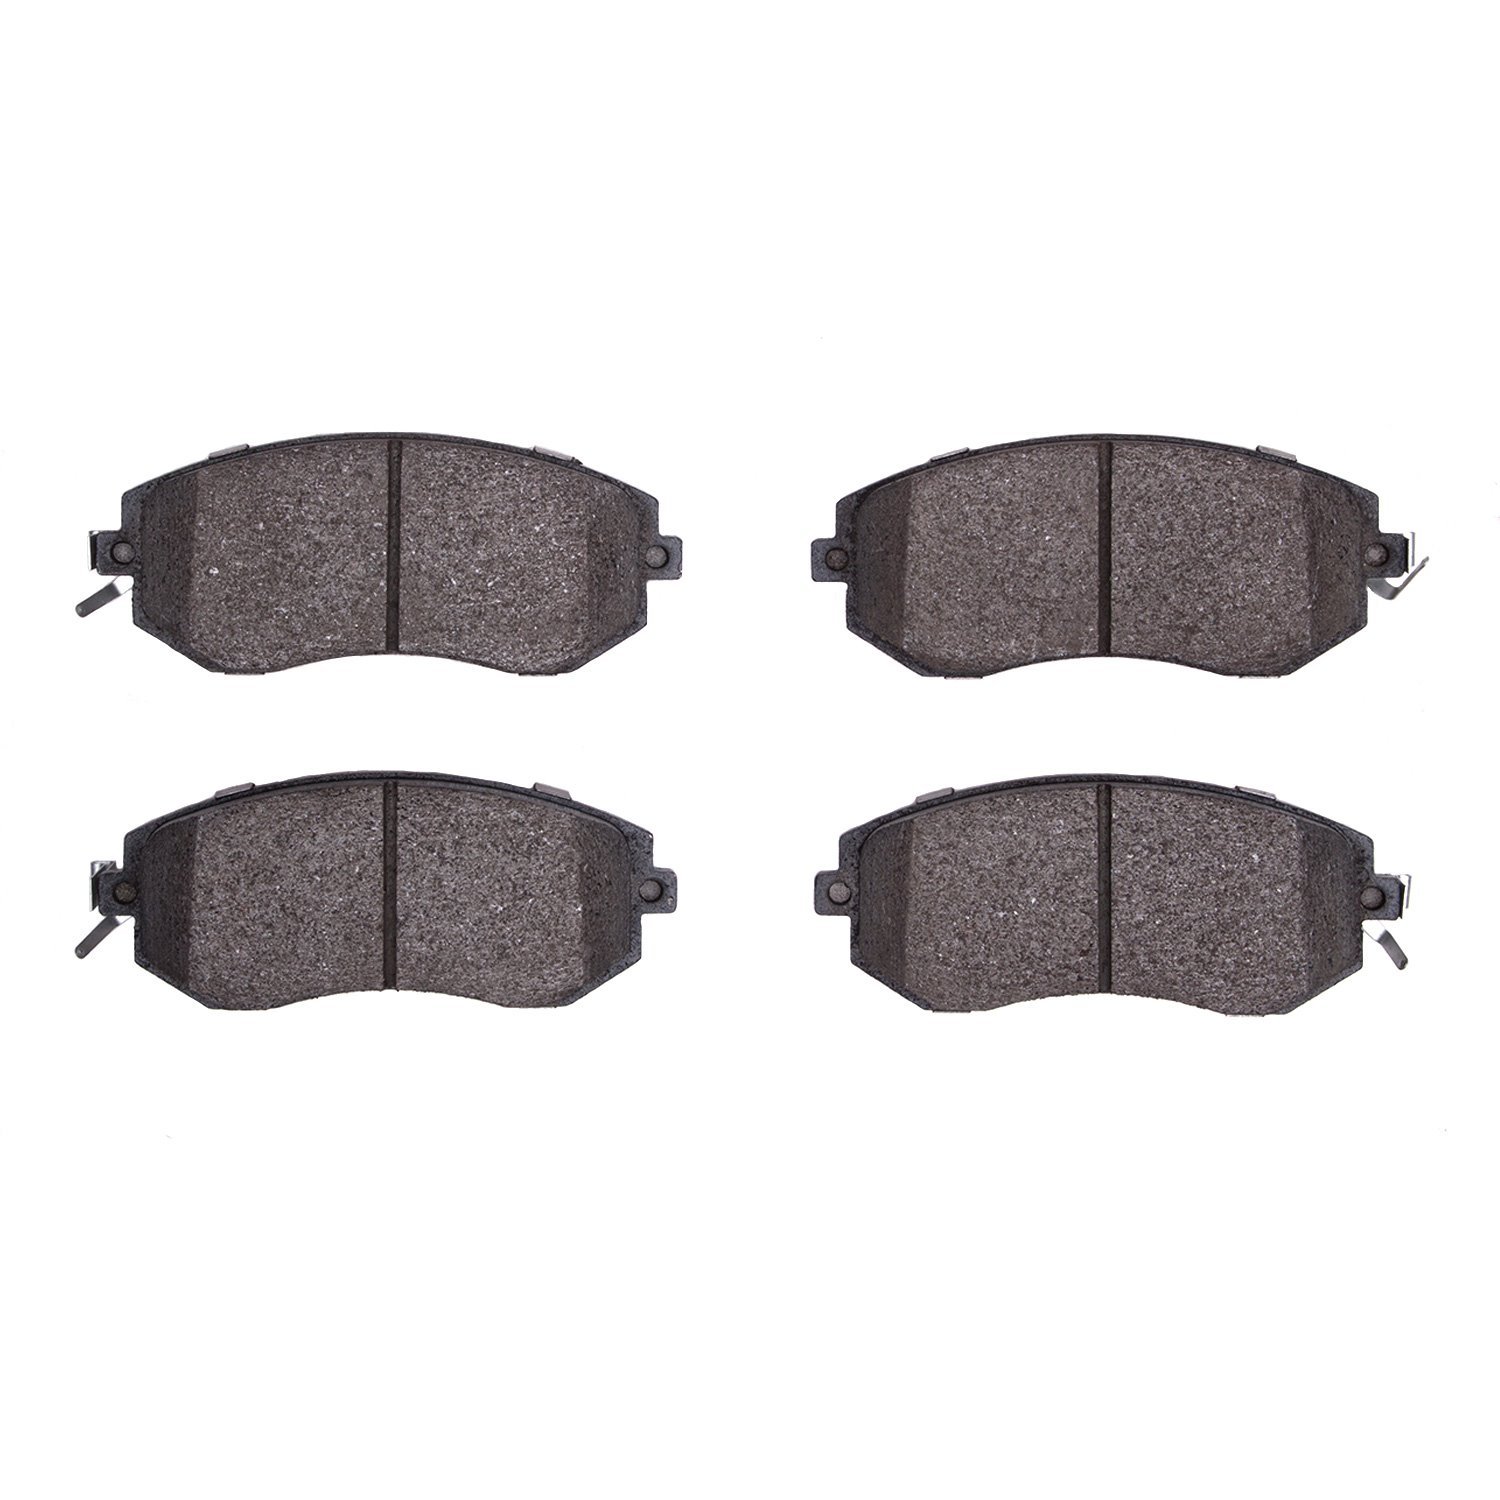 Track/Street Brake Pads, Fits Select Fits Multiple Makes/Models, Position: Front